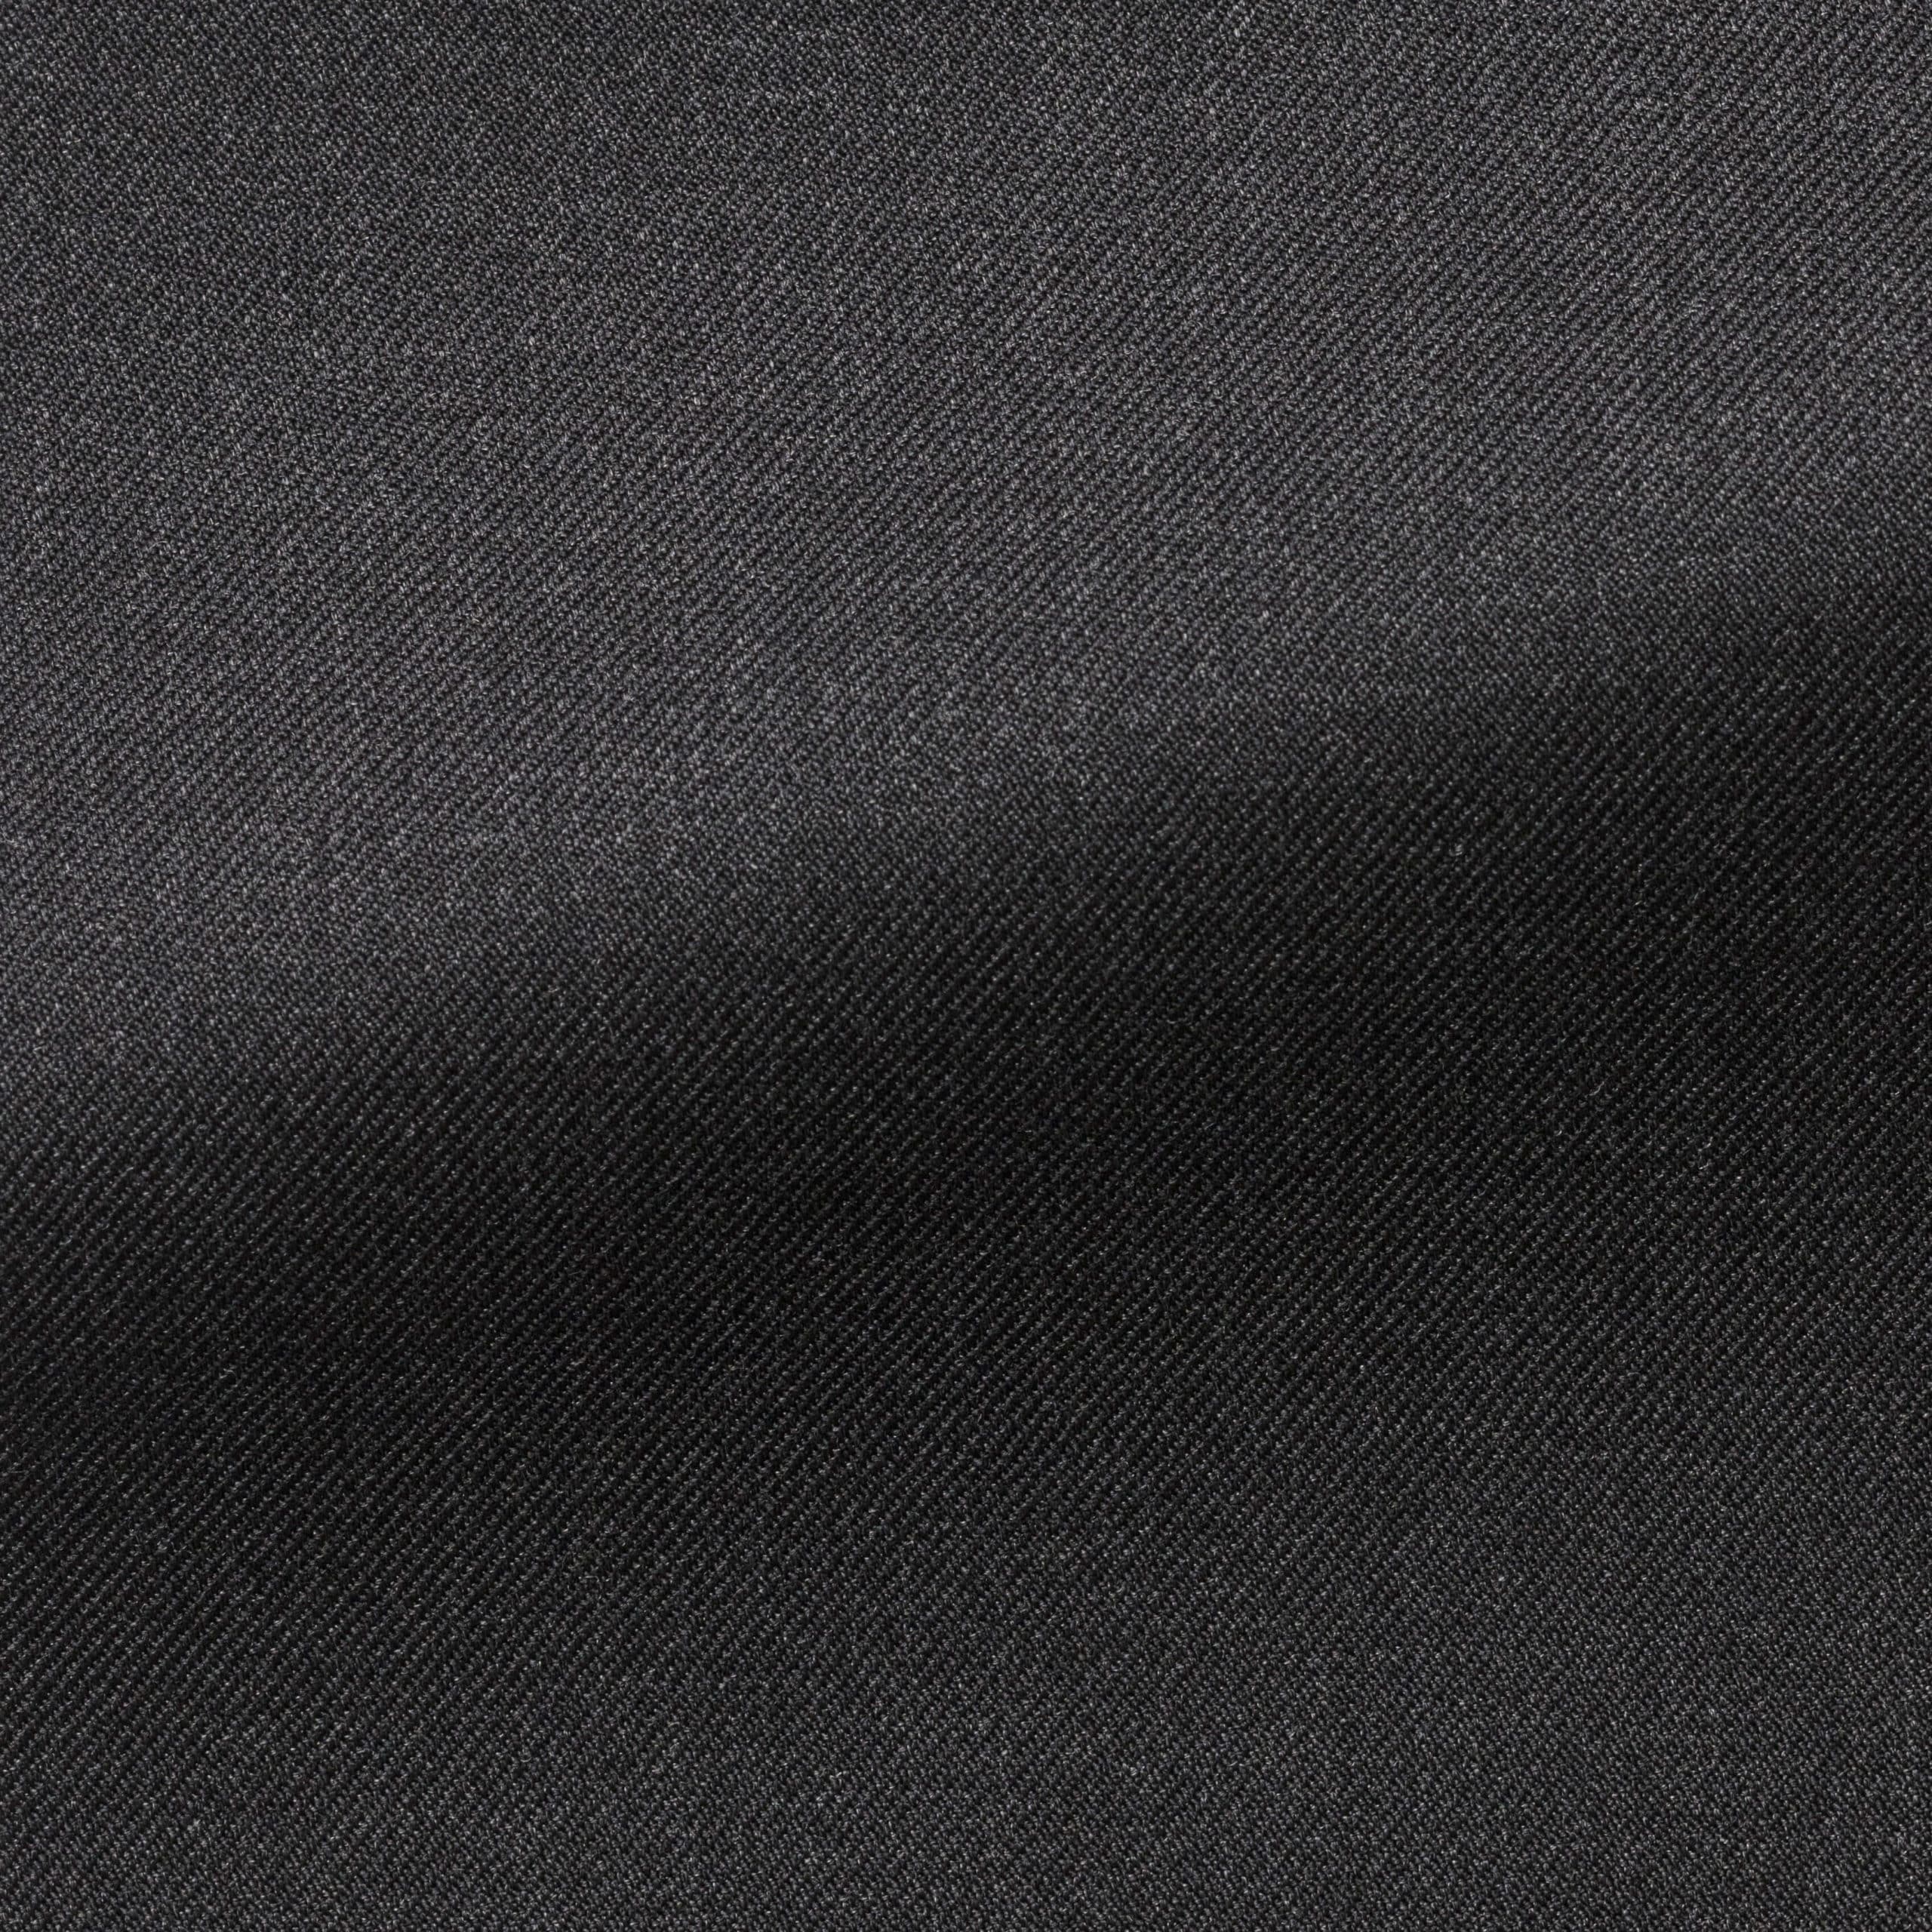 DR009 Fabric Sample image 1